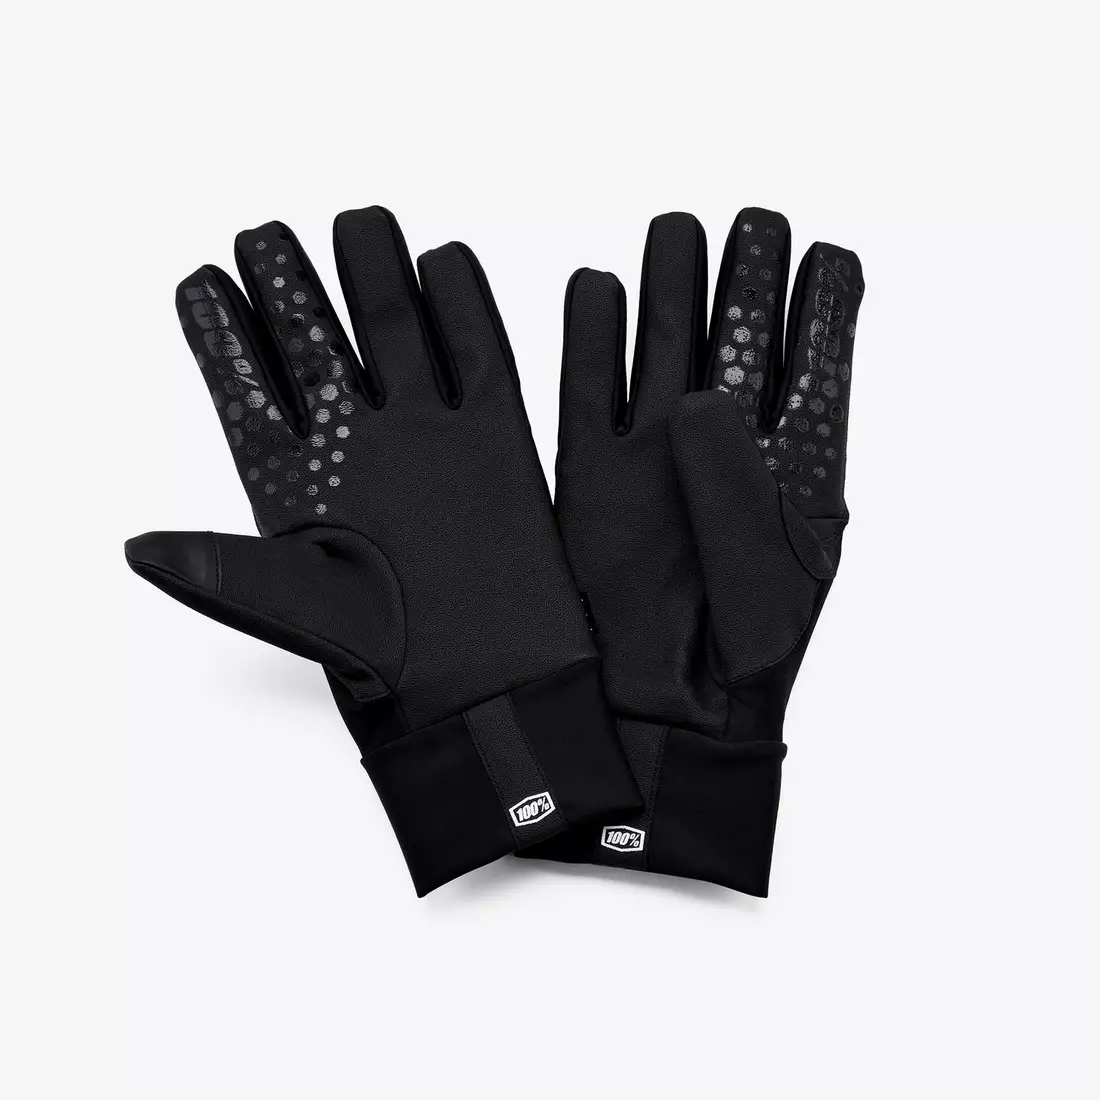 100% bicycle gloves hydromatic brisker black STO-10010-001-12